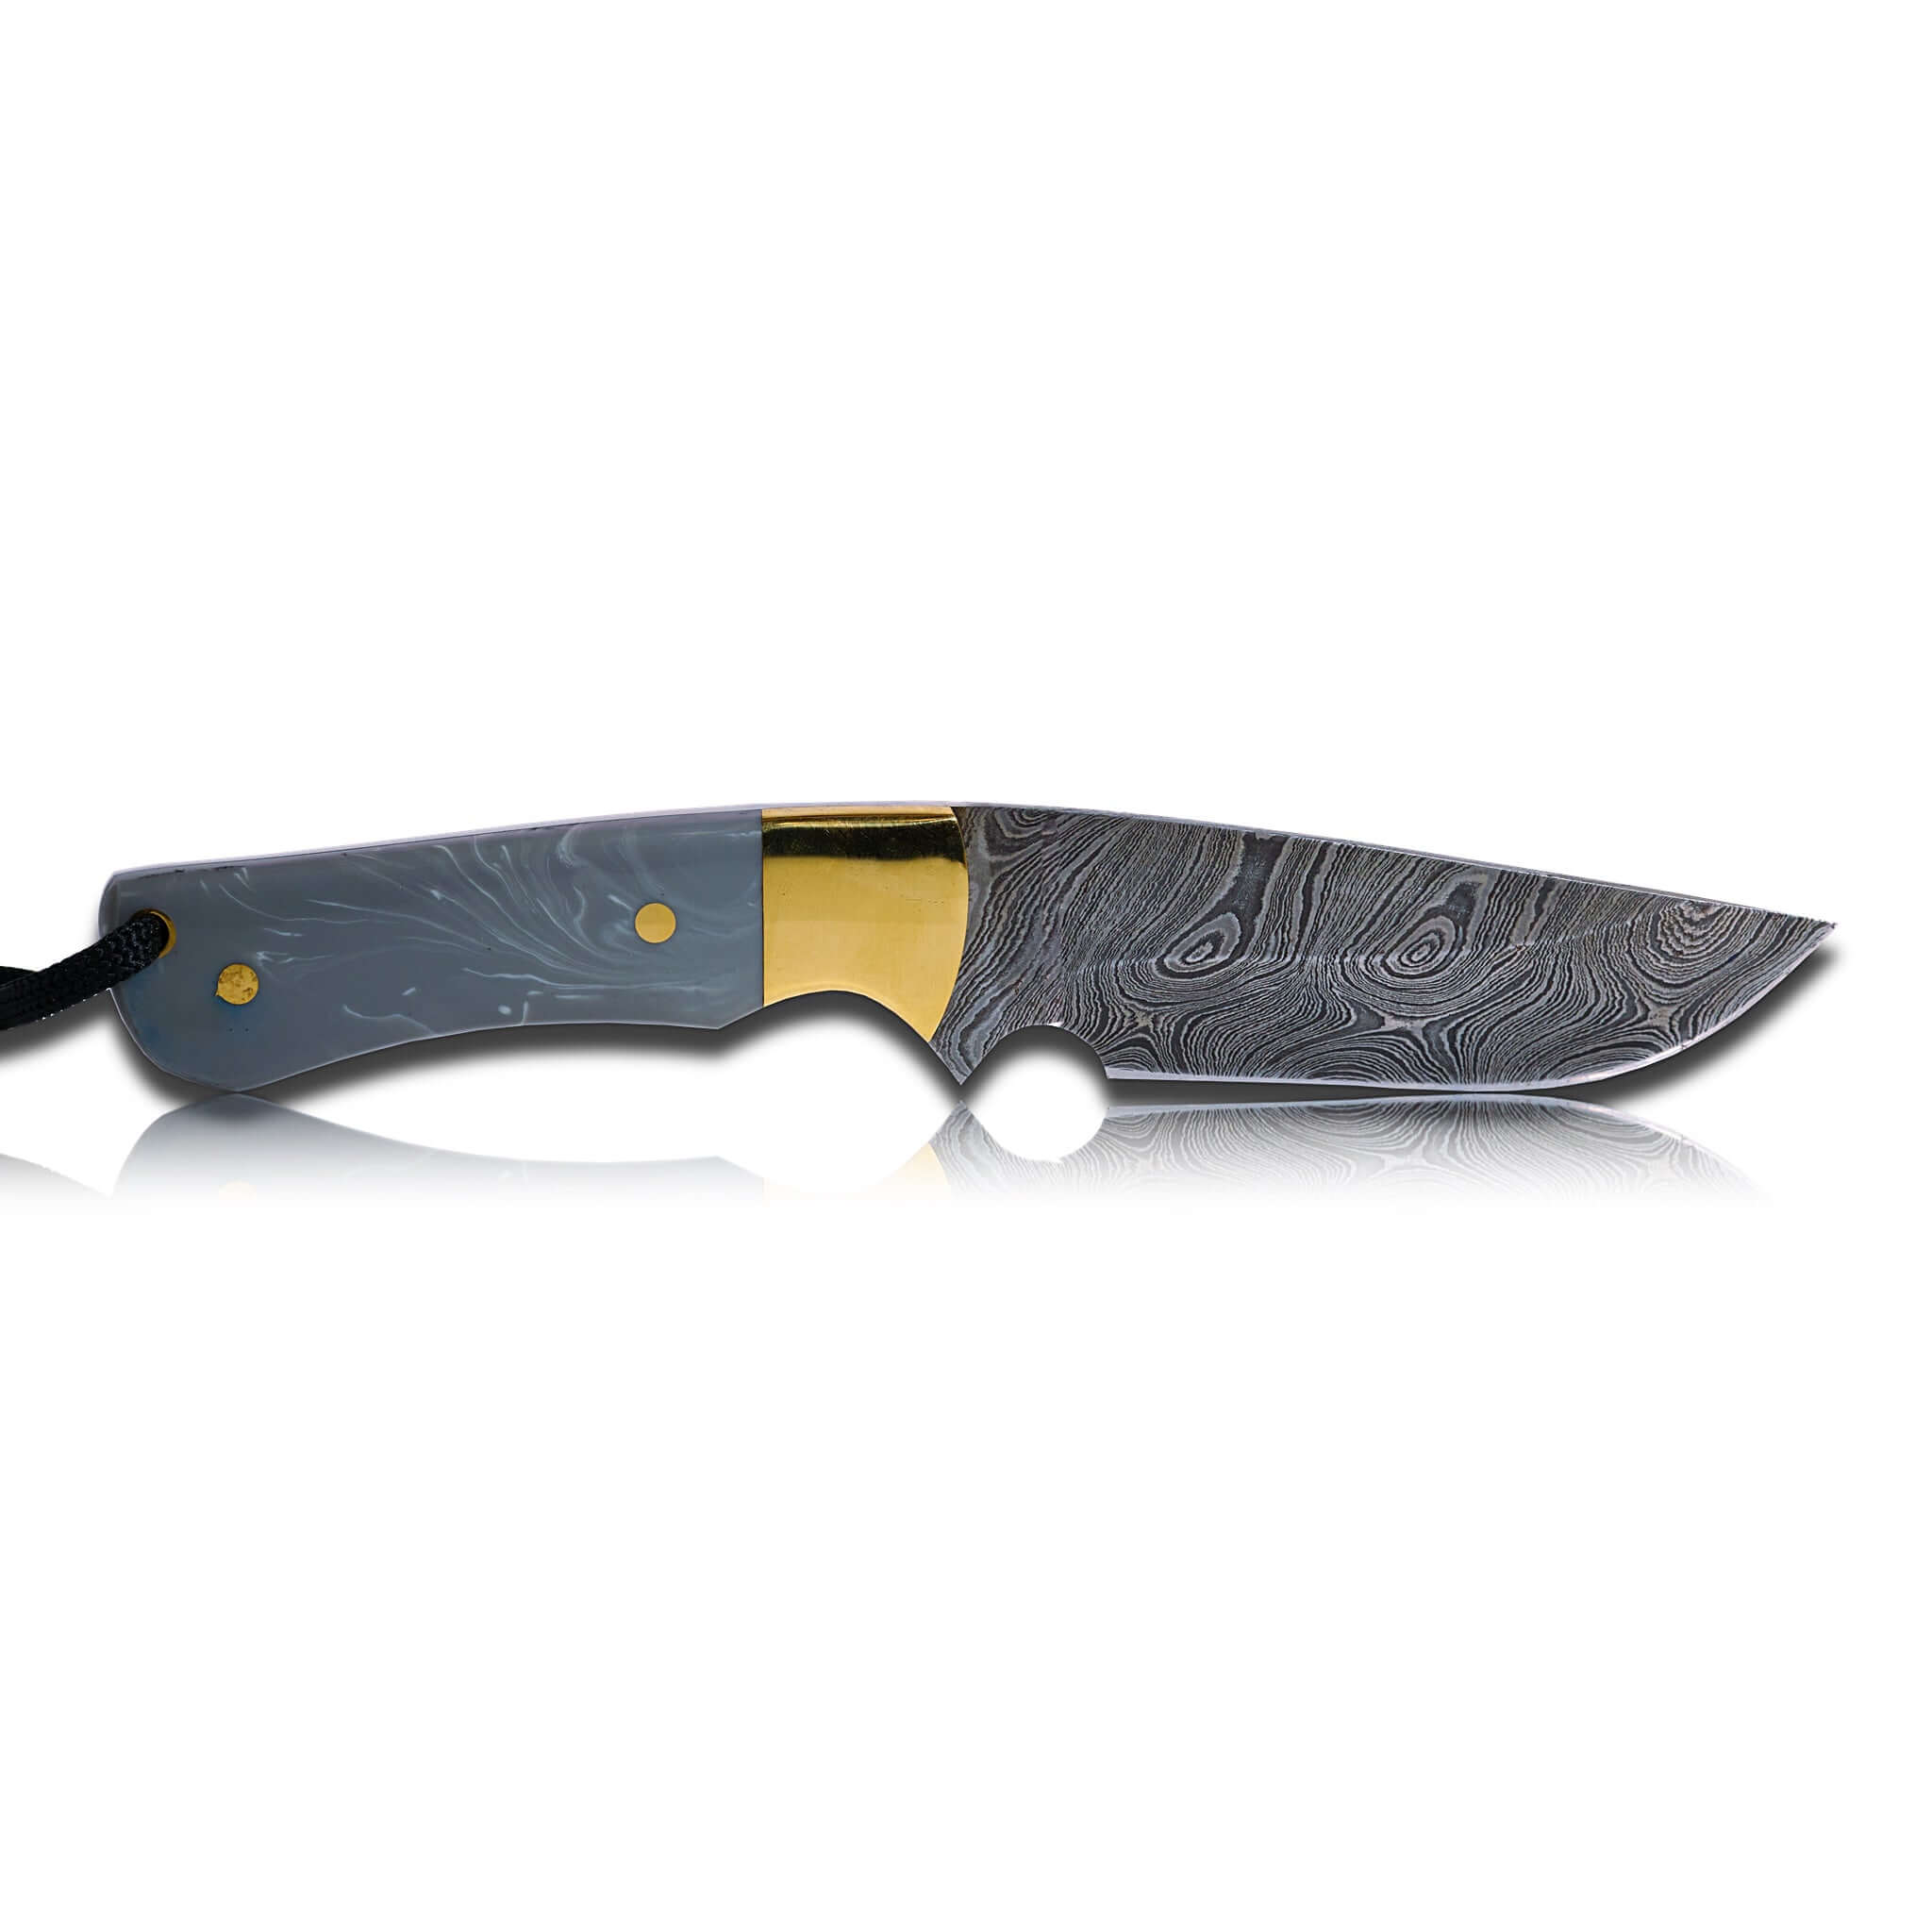 Original Kaito Damascus Steel Skinner Knife 4 inch blade